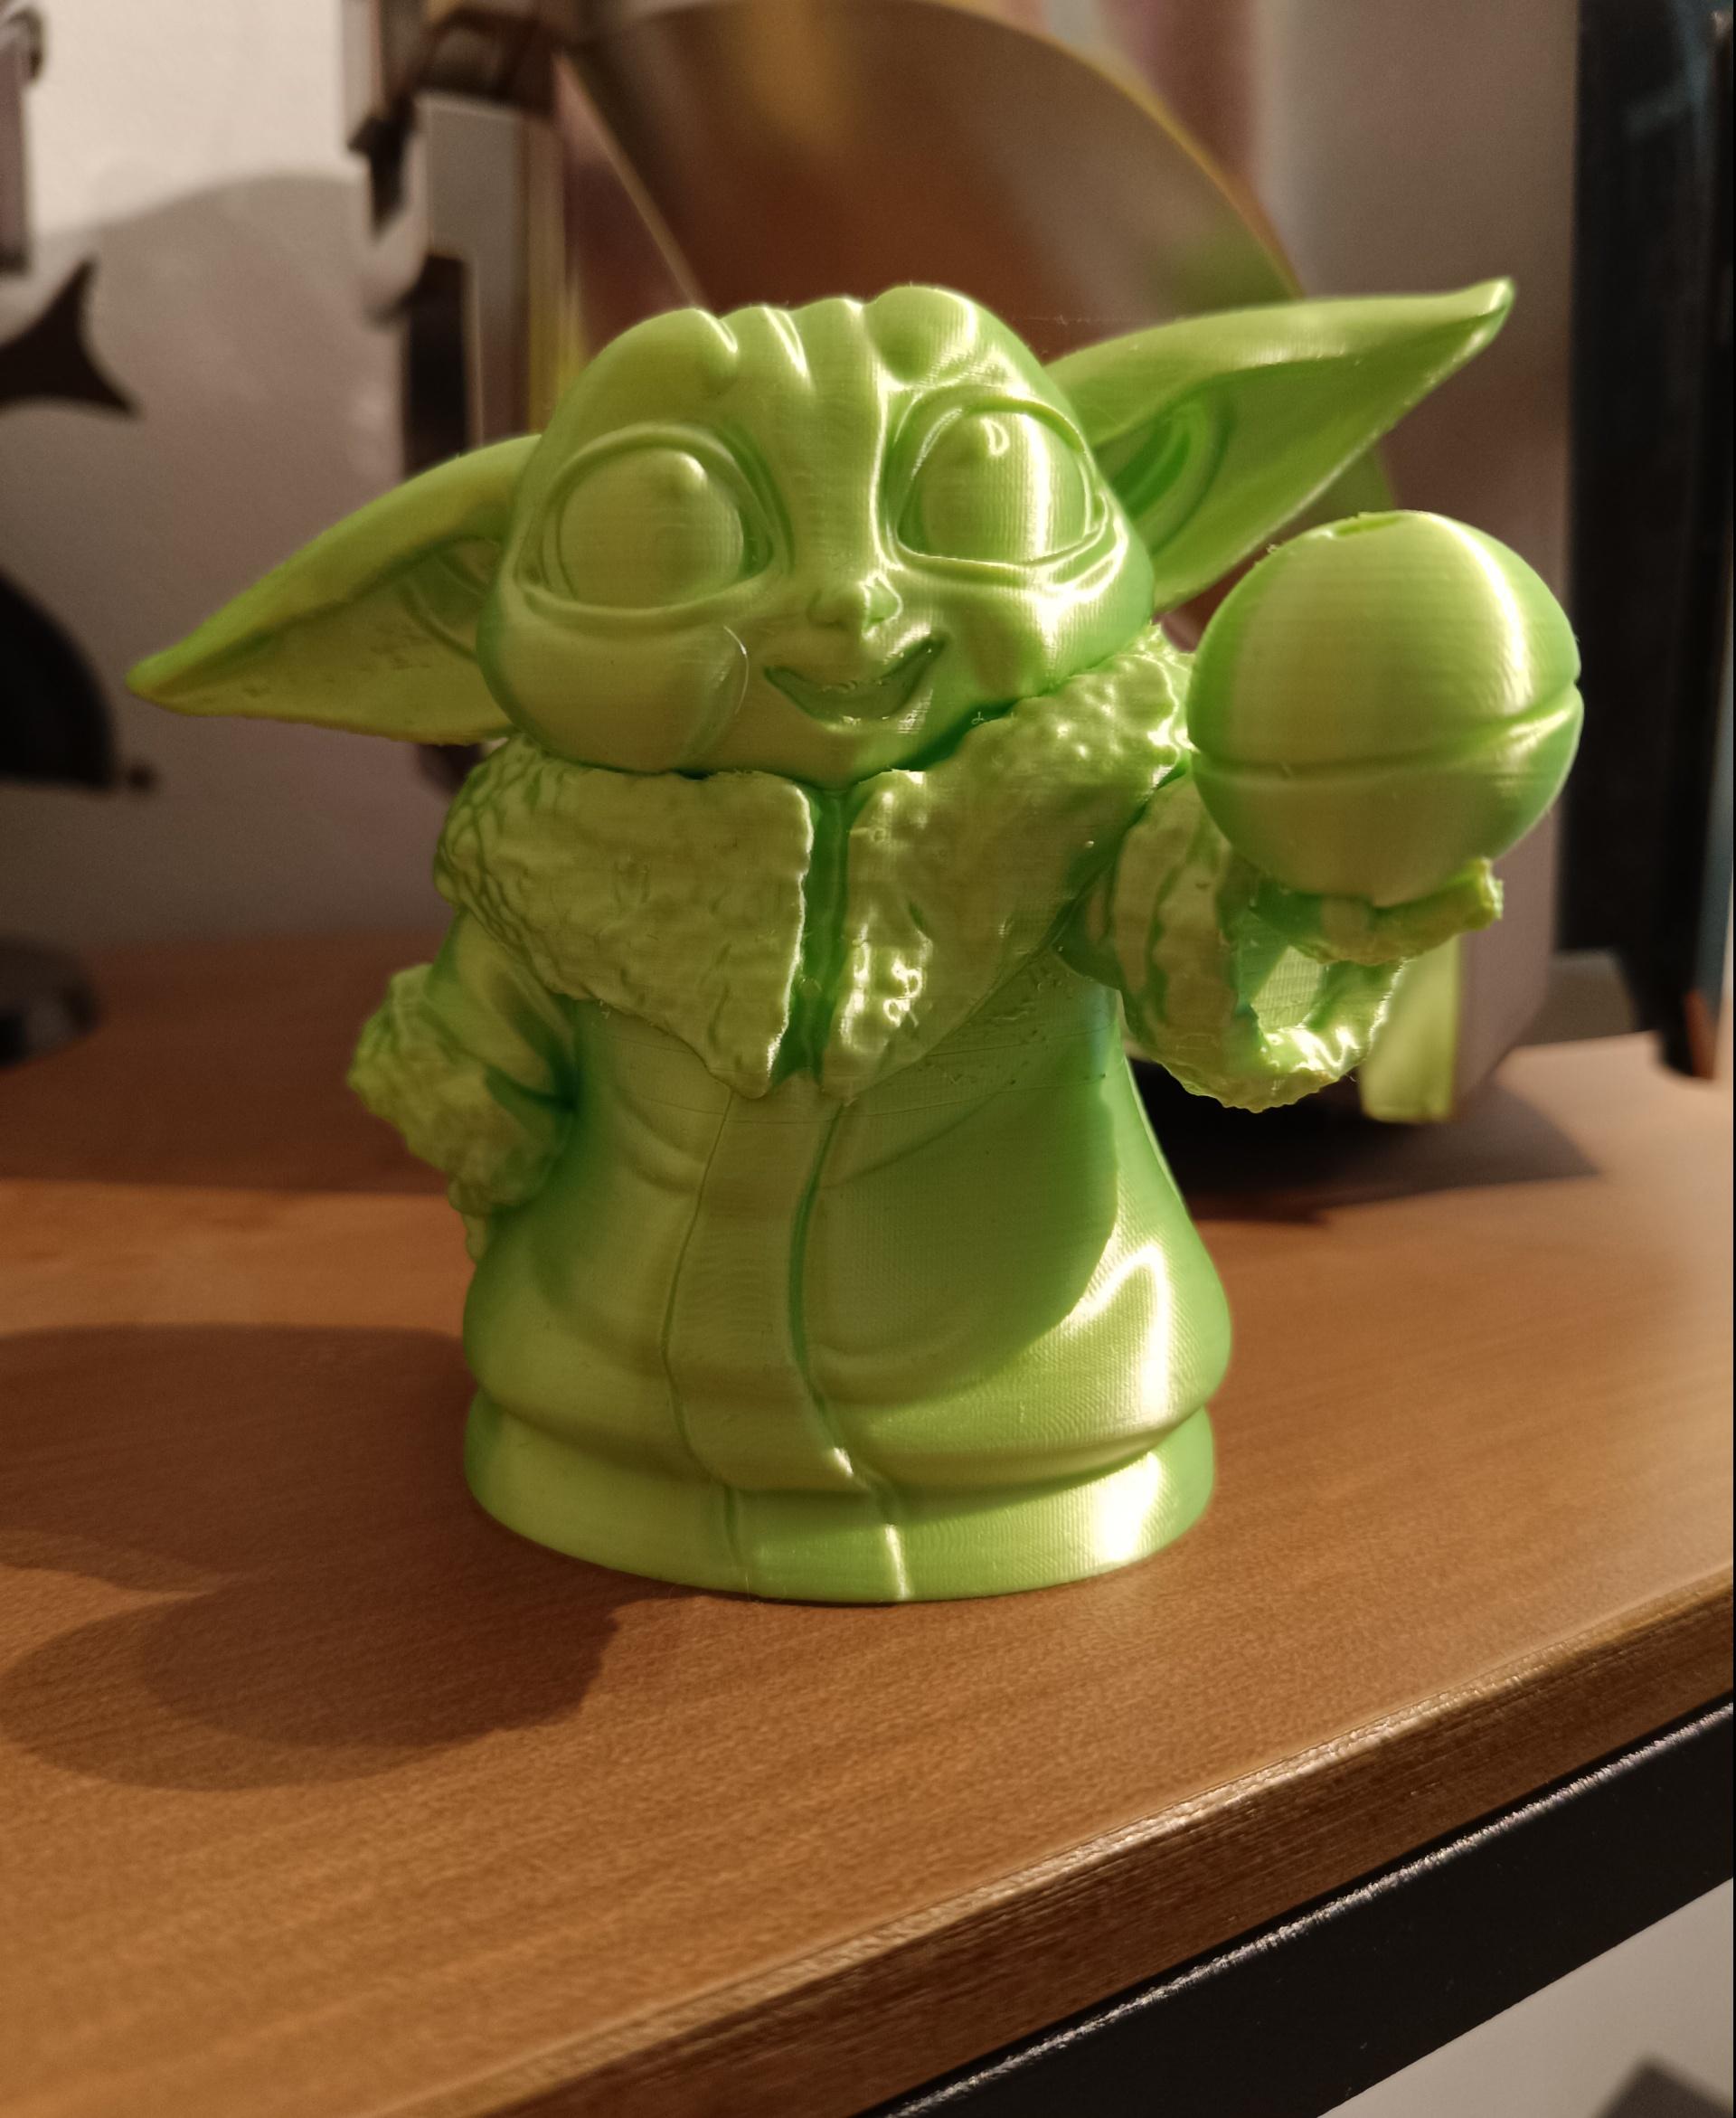 Grogu - baby yoda - Star Wars - Fan art - Grogu aka Baby Yoda from The Mandalorian designed by PrintedObsession - 3d model